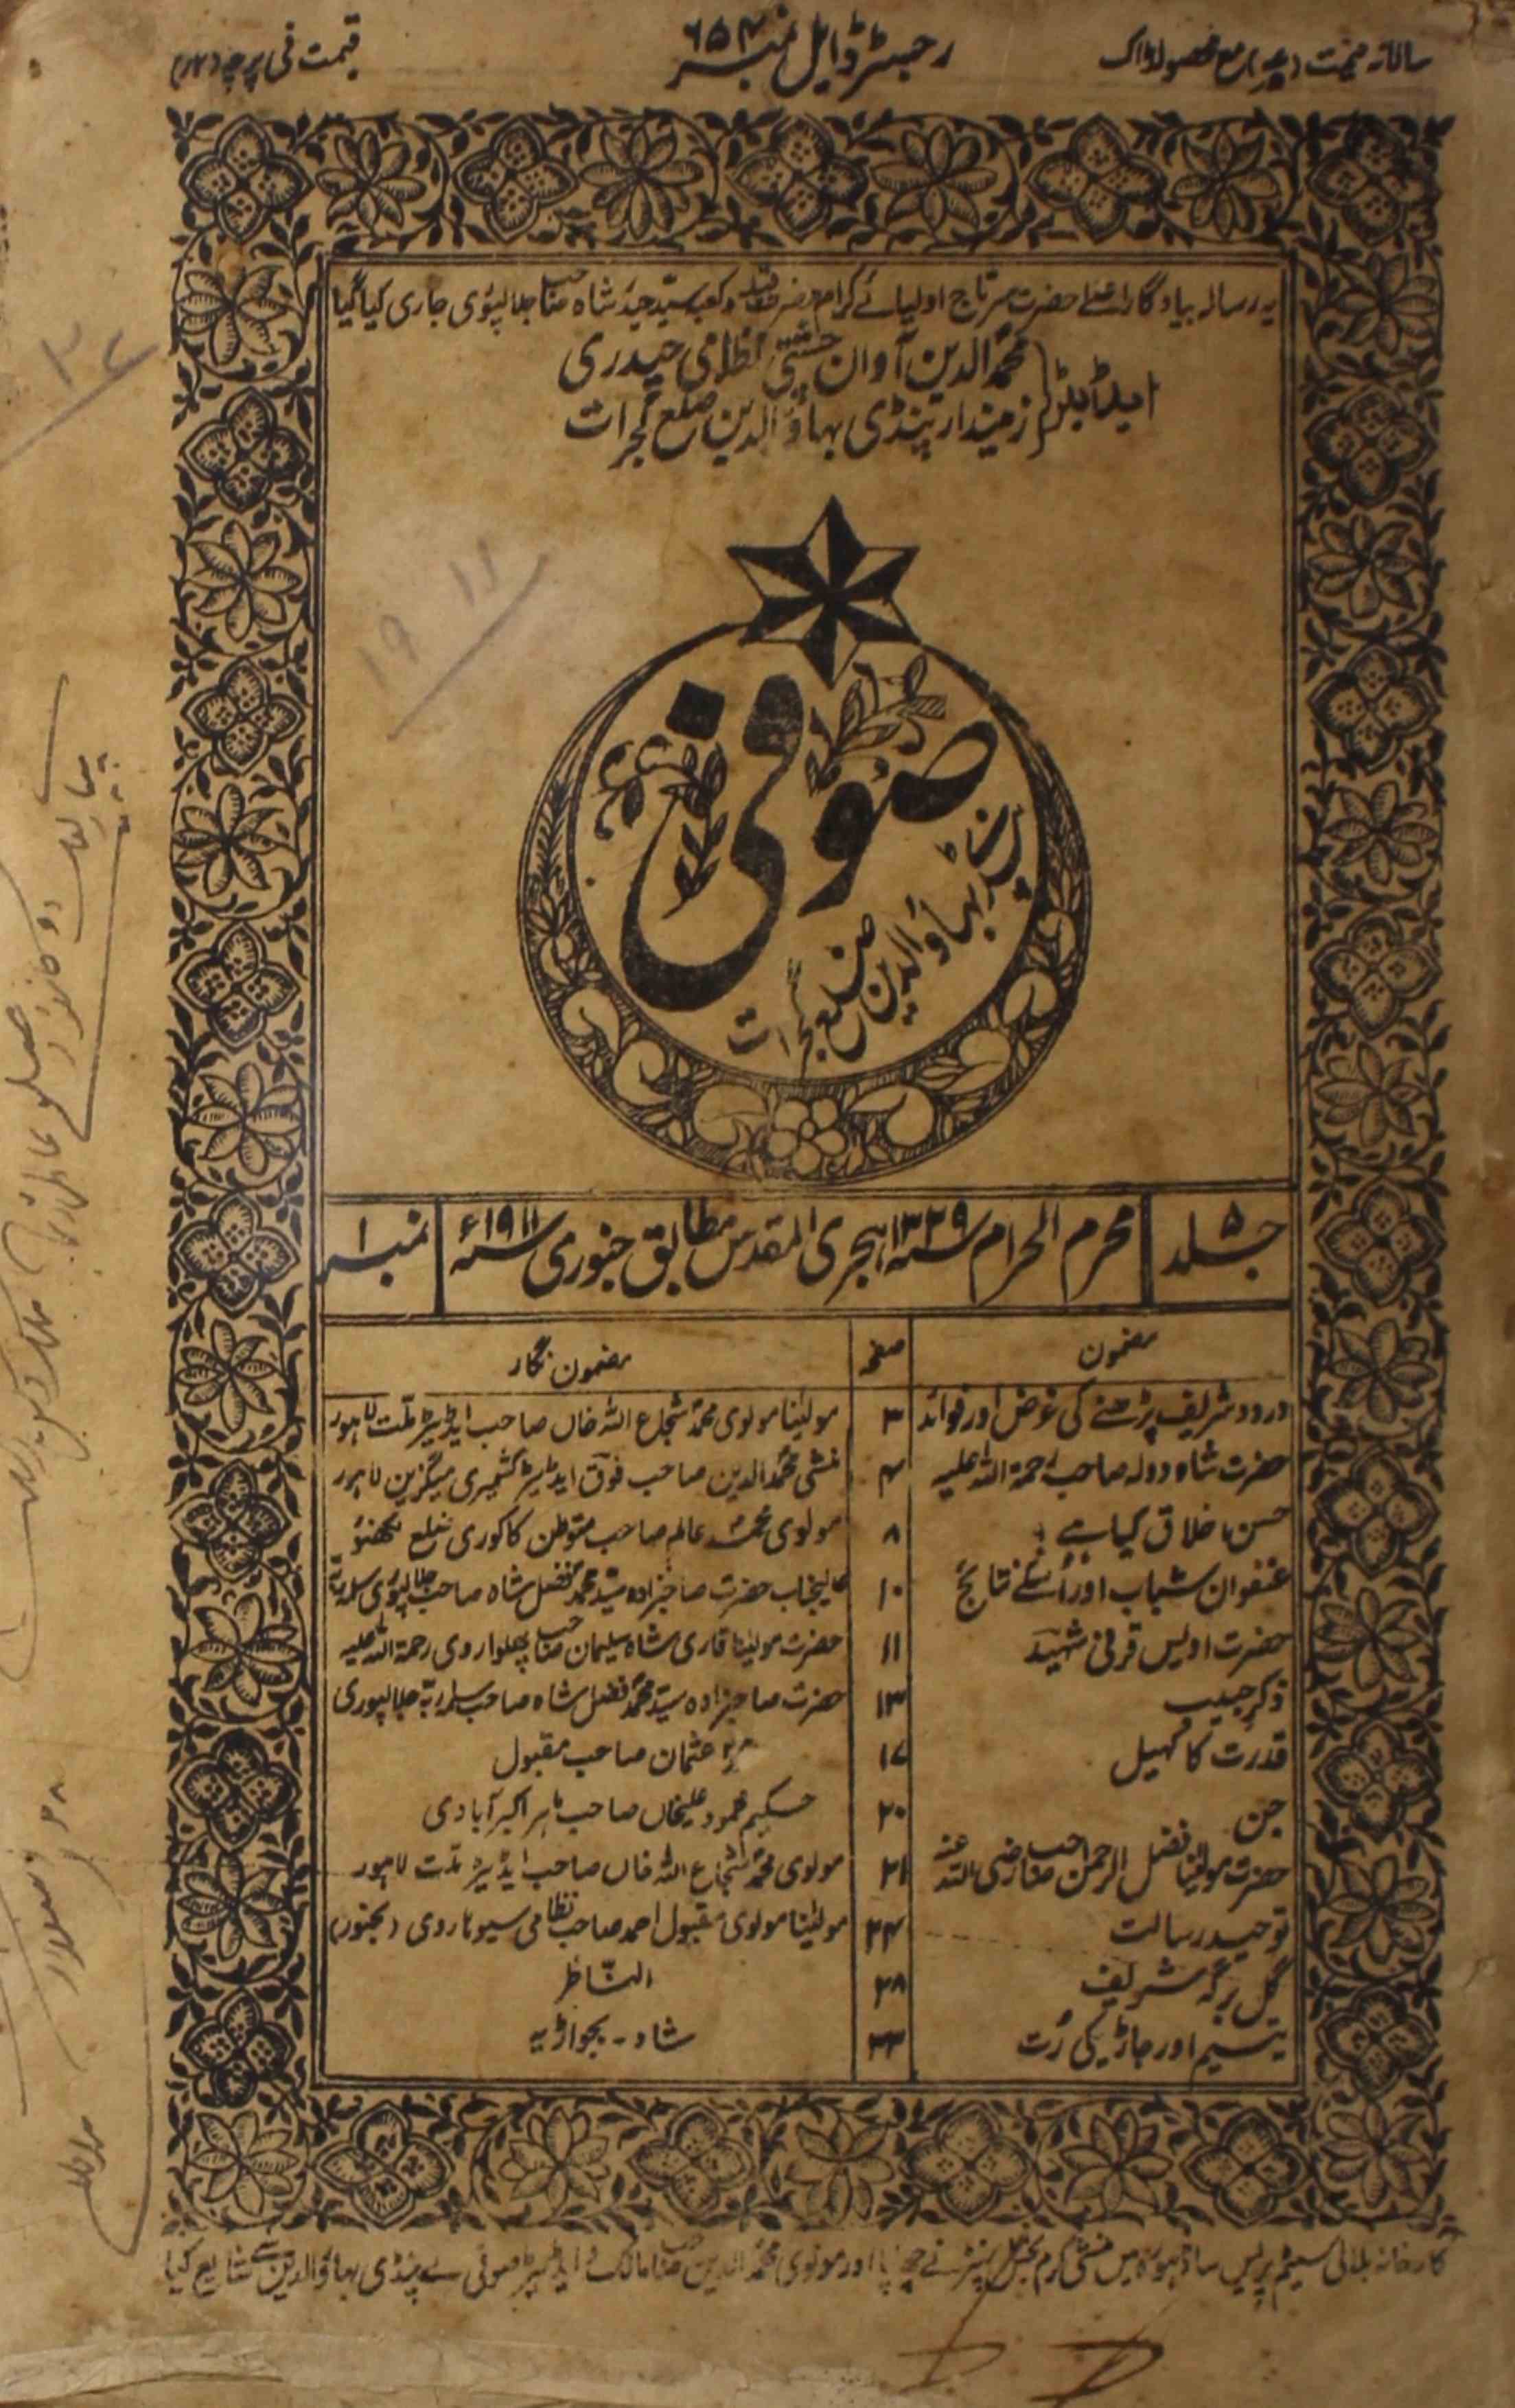 Sufi Jild 5 No 1 January 1911-Svk